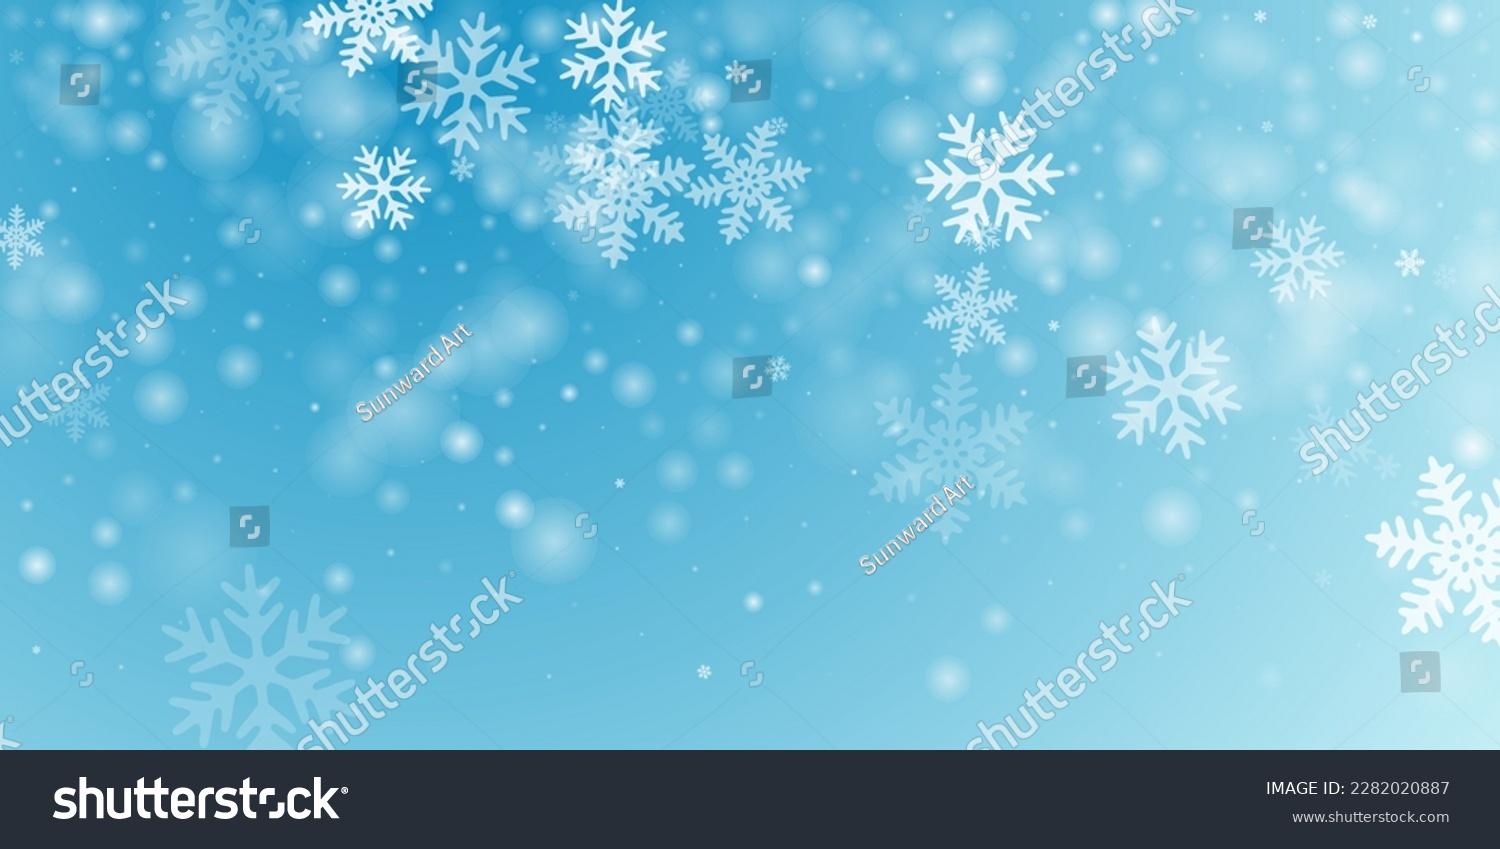 Snow Image Stock Photos 3d Objects Vectors